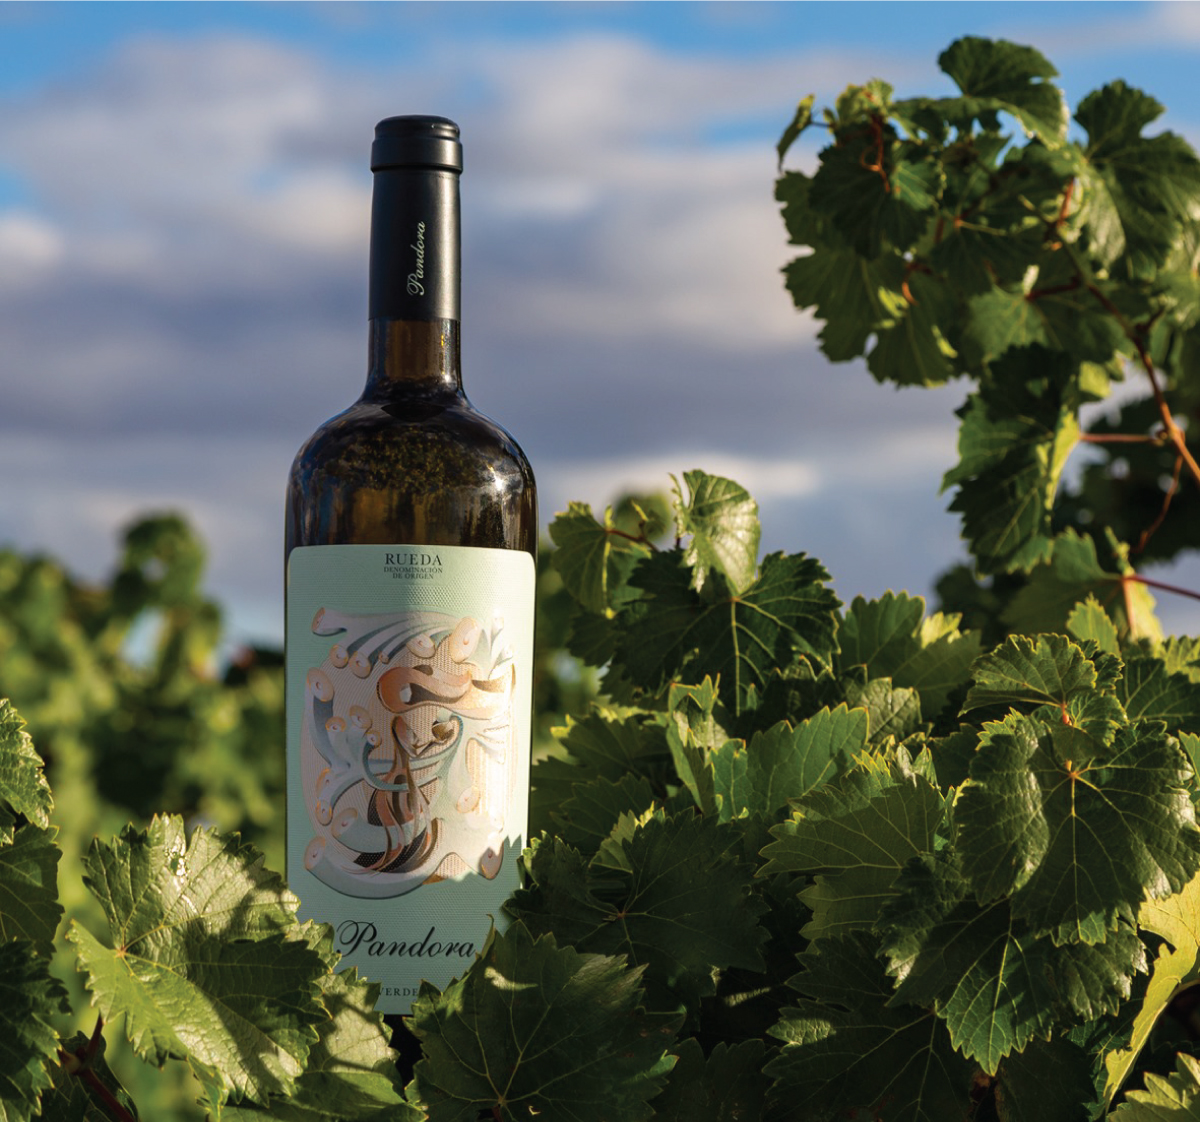 A bottle of Pandra Verdejo among the vines of Bodegas Pandora.